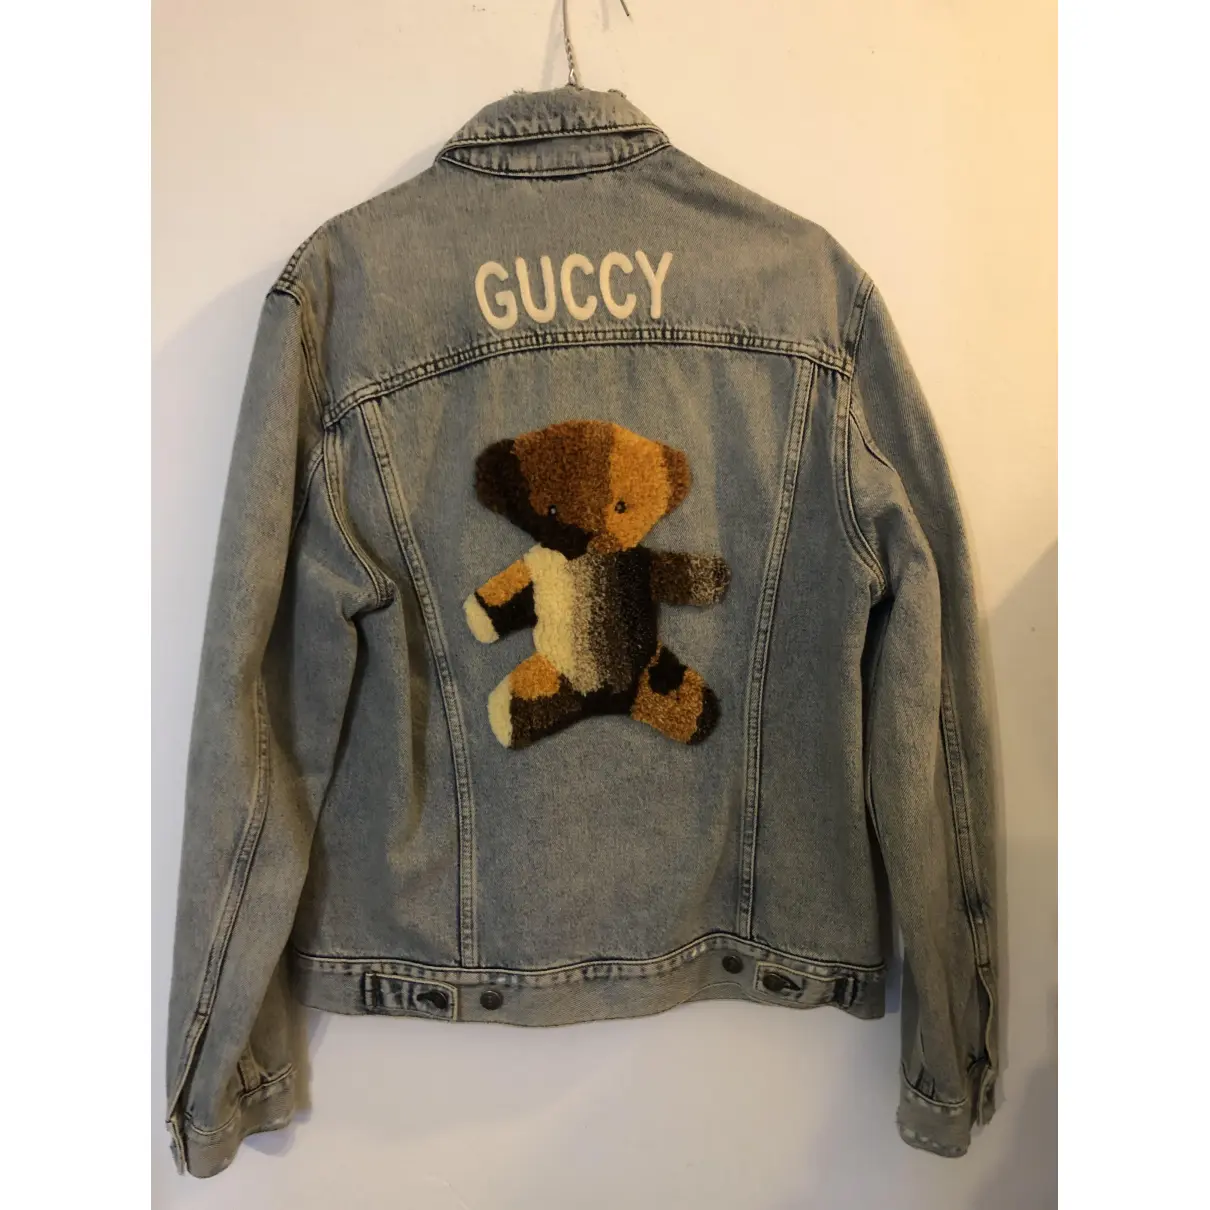 Buy Gucci Jacket online